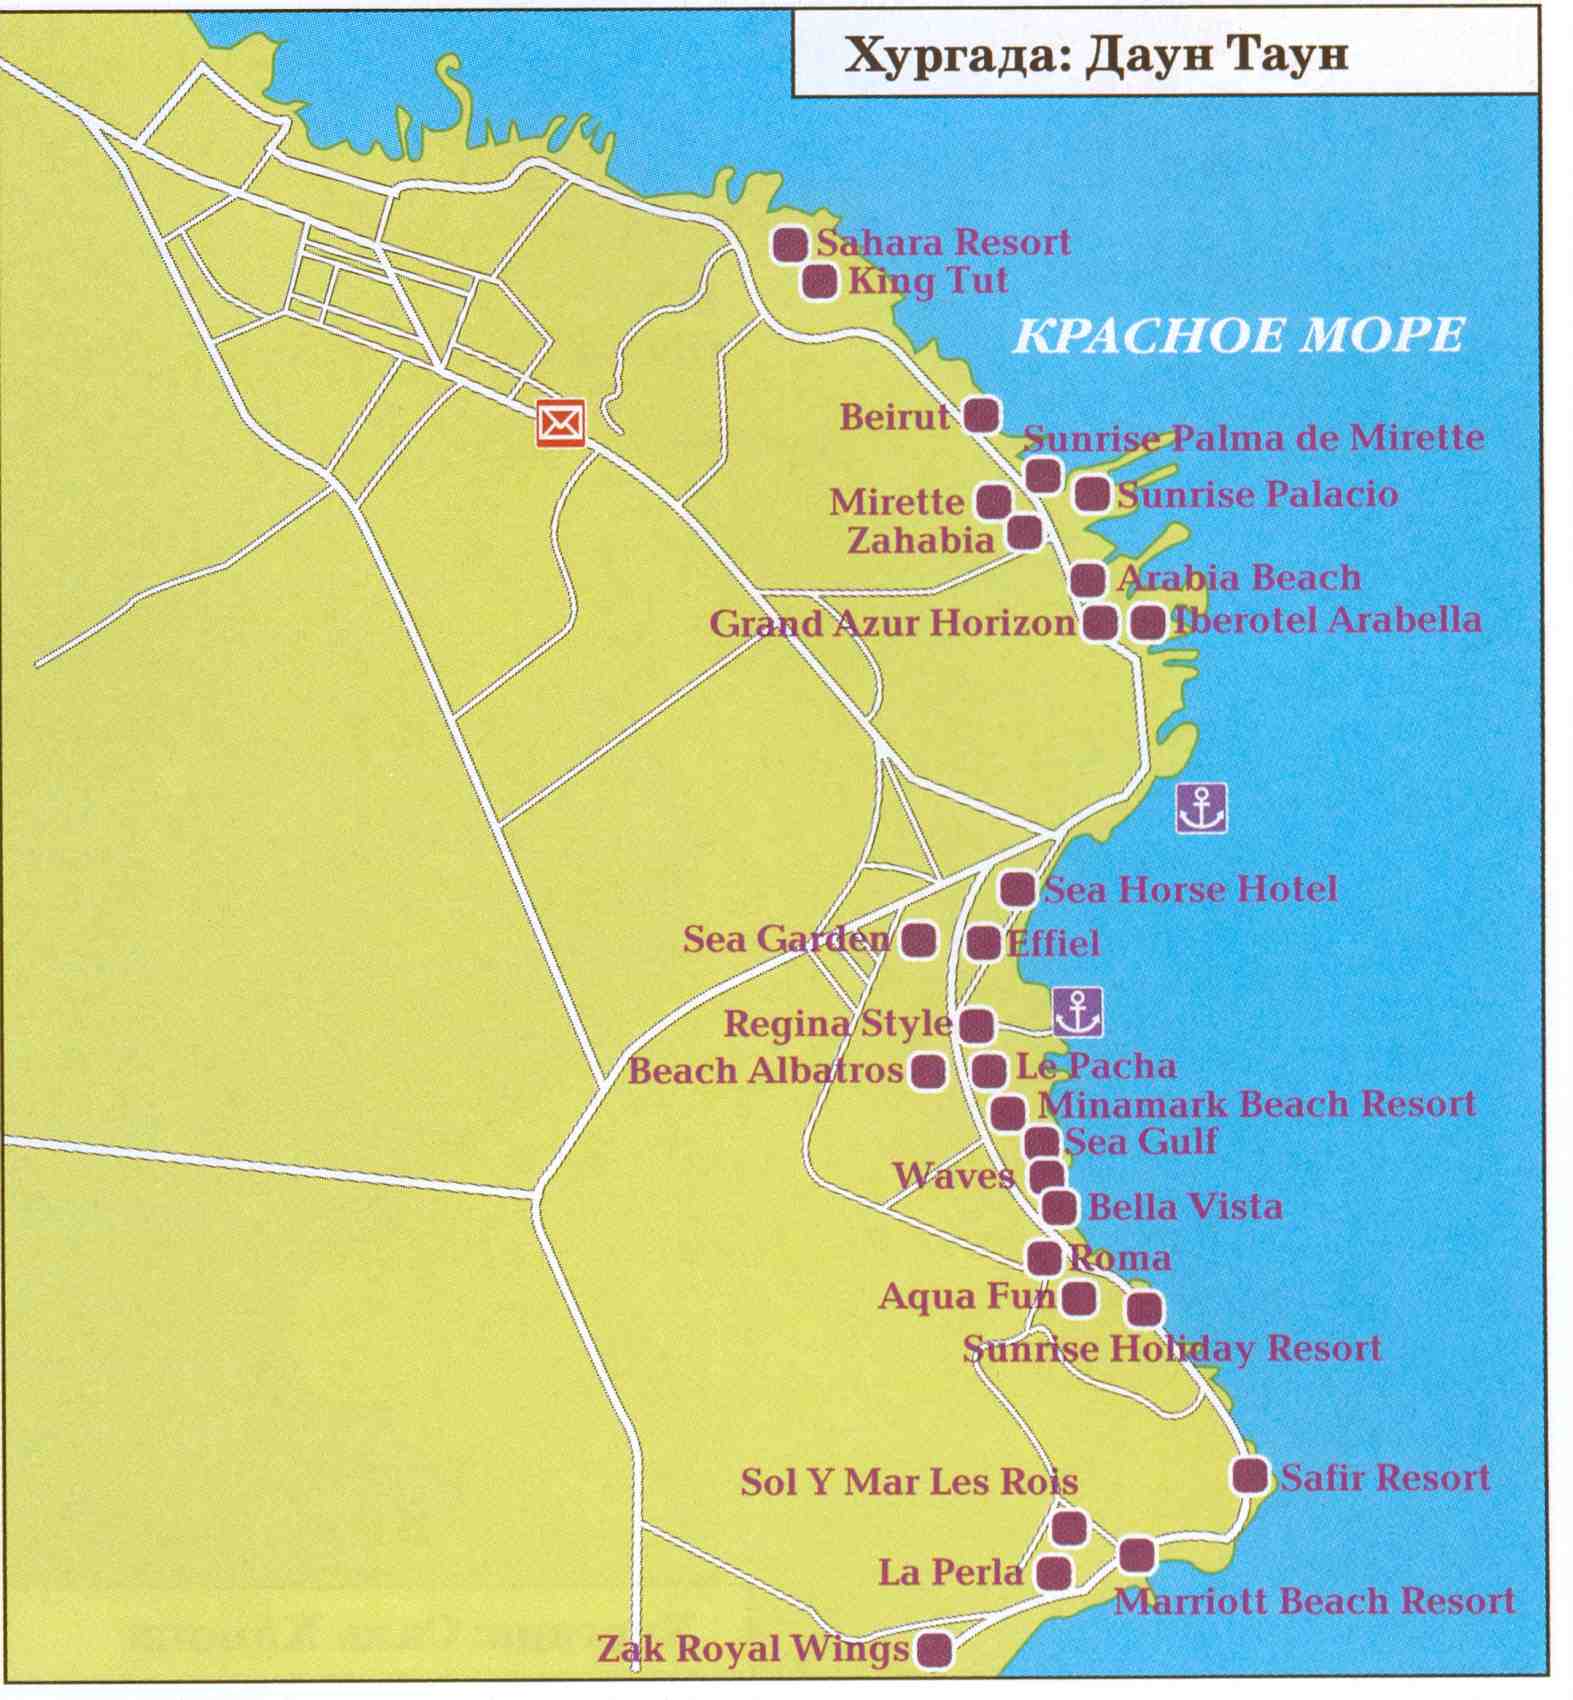 Египет - карта курорта Хургада Даун Таун. Карта отелей на побережье Красного моря - Даун Таун, A0 - 